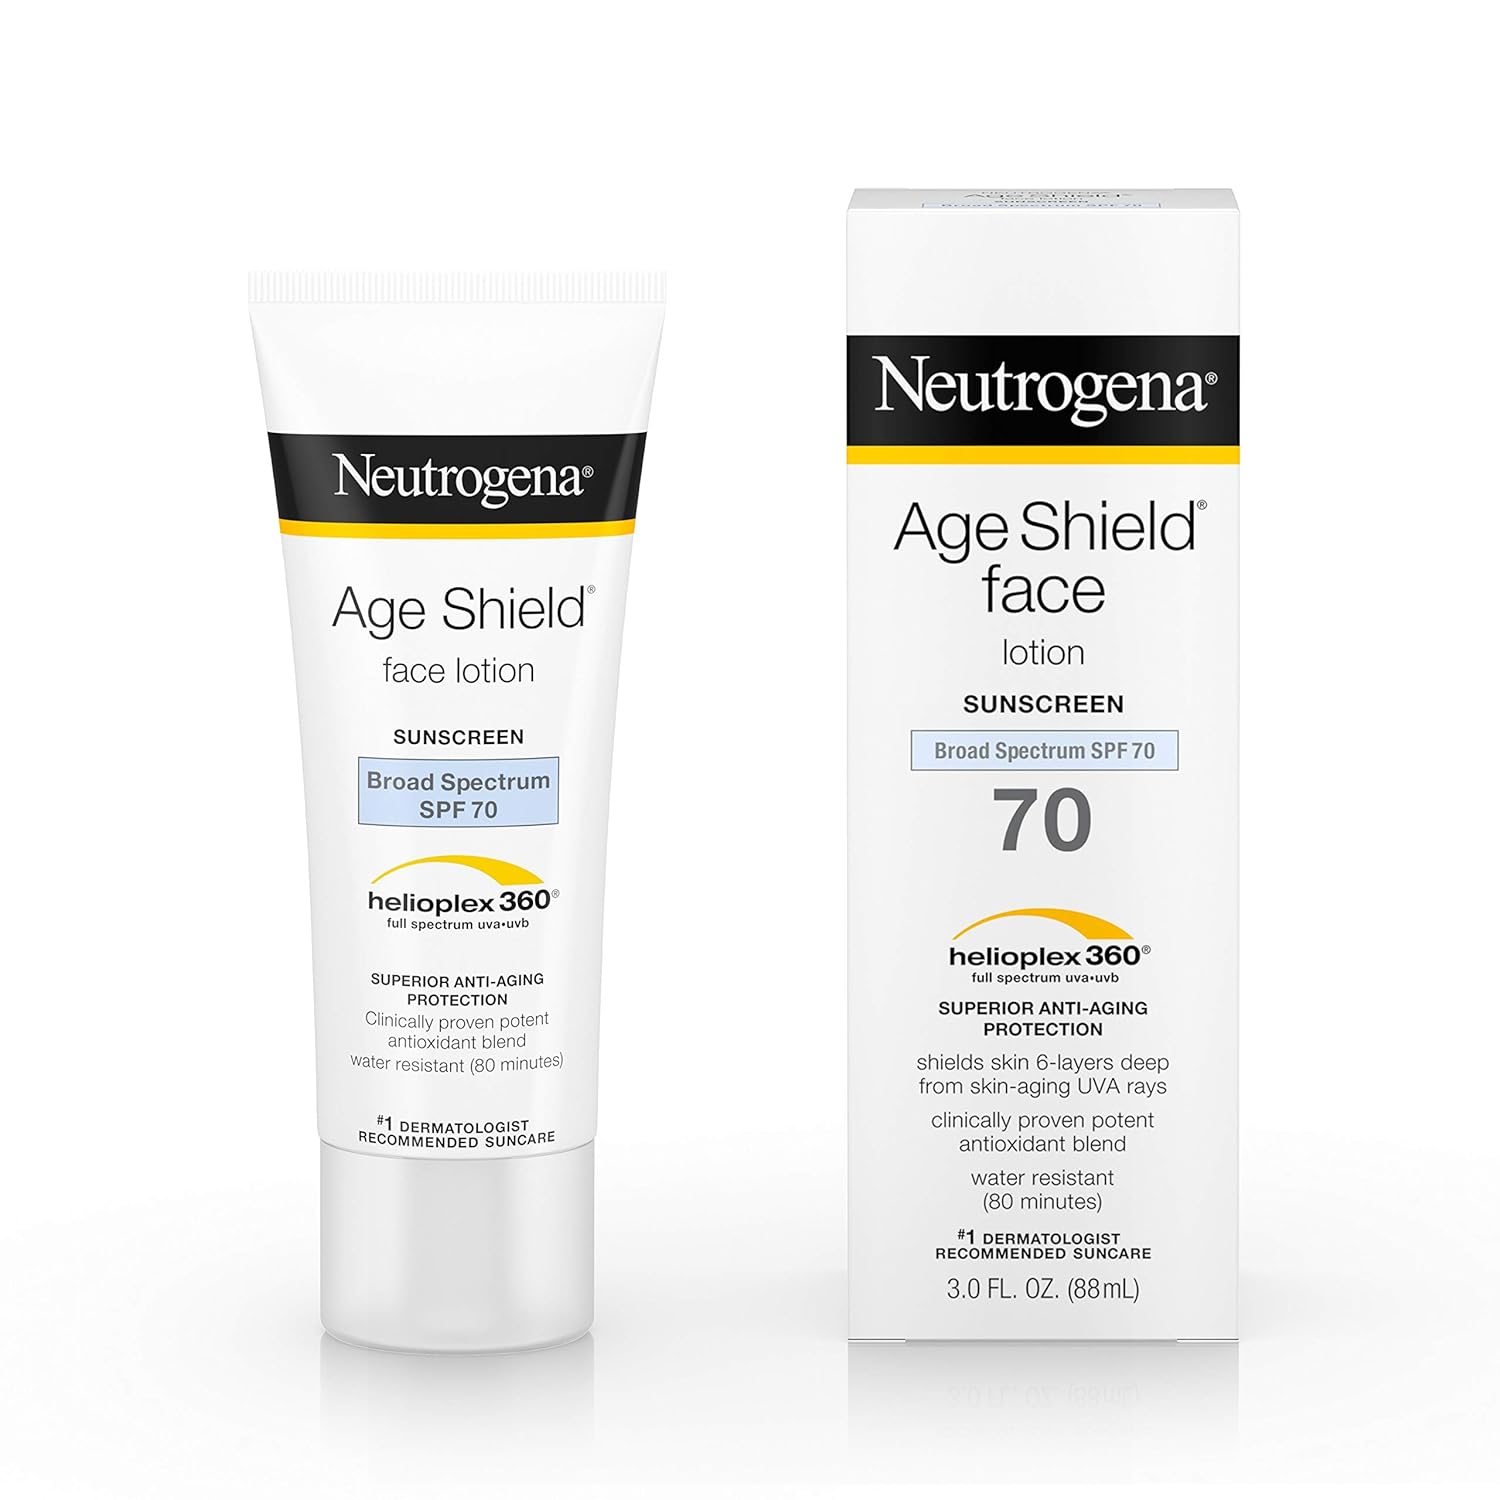 Neutrogena Age Shield Face, Lotion, 3 Fl oz (89 ml) by